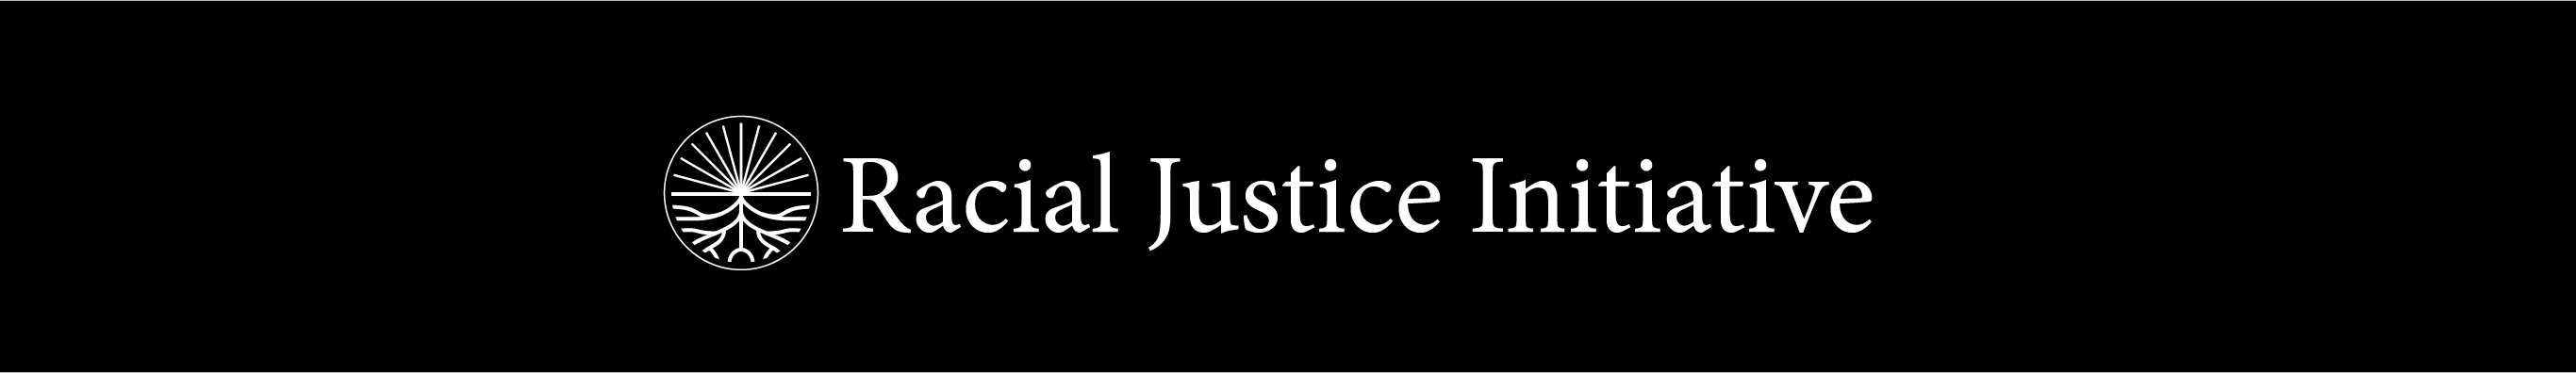 Racial Justice Initiative